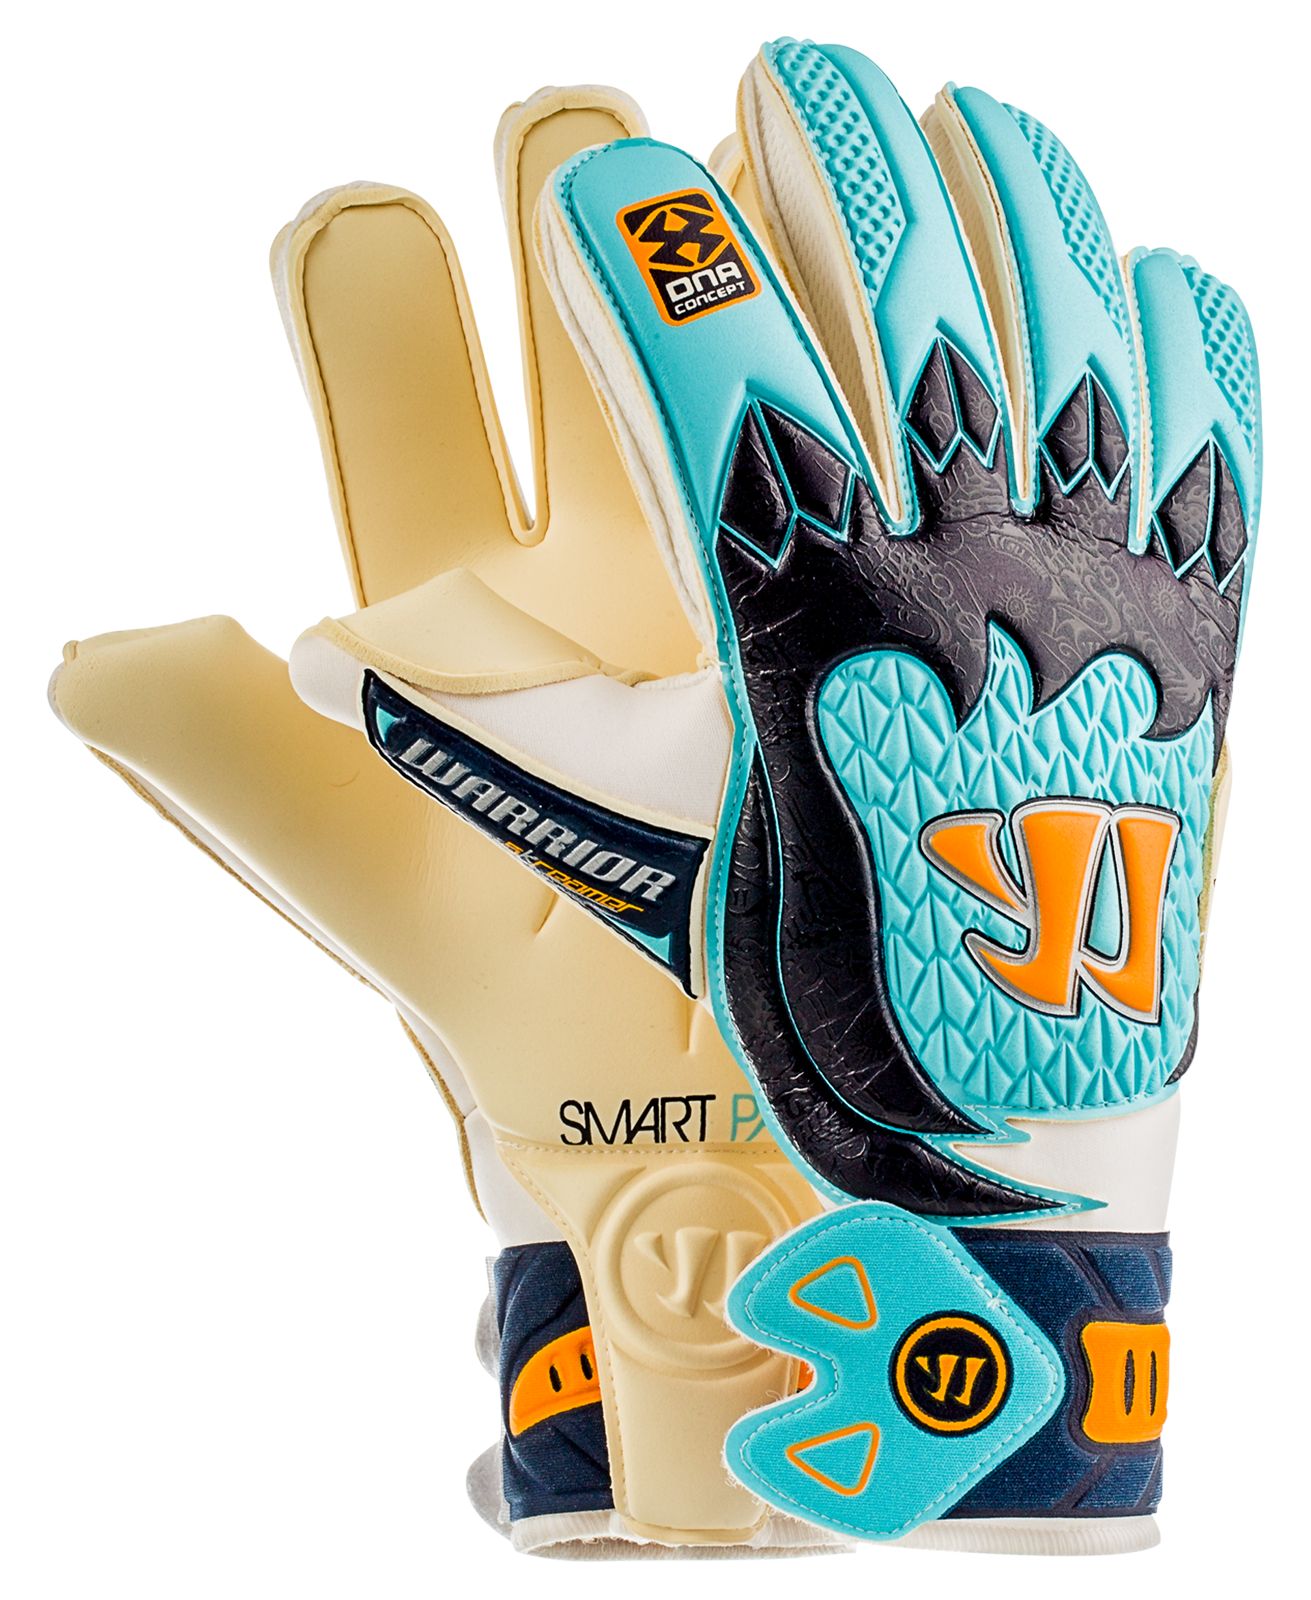 Skreamer Pro Goalkeeper Gloves, White with Blue Radiance & Insignia Blue image number 0